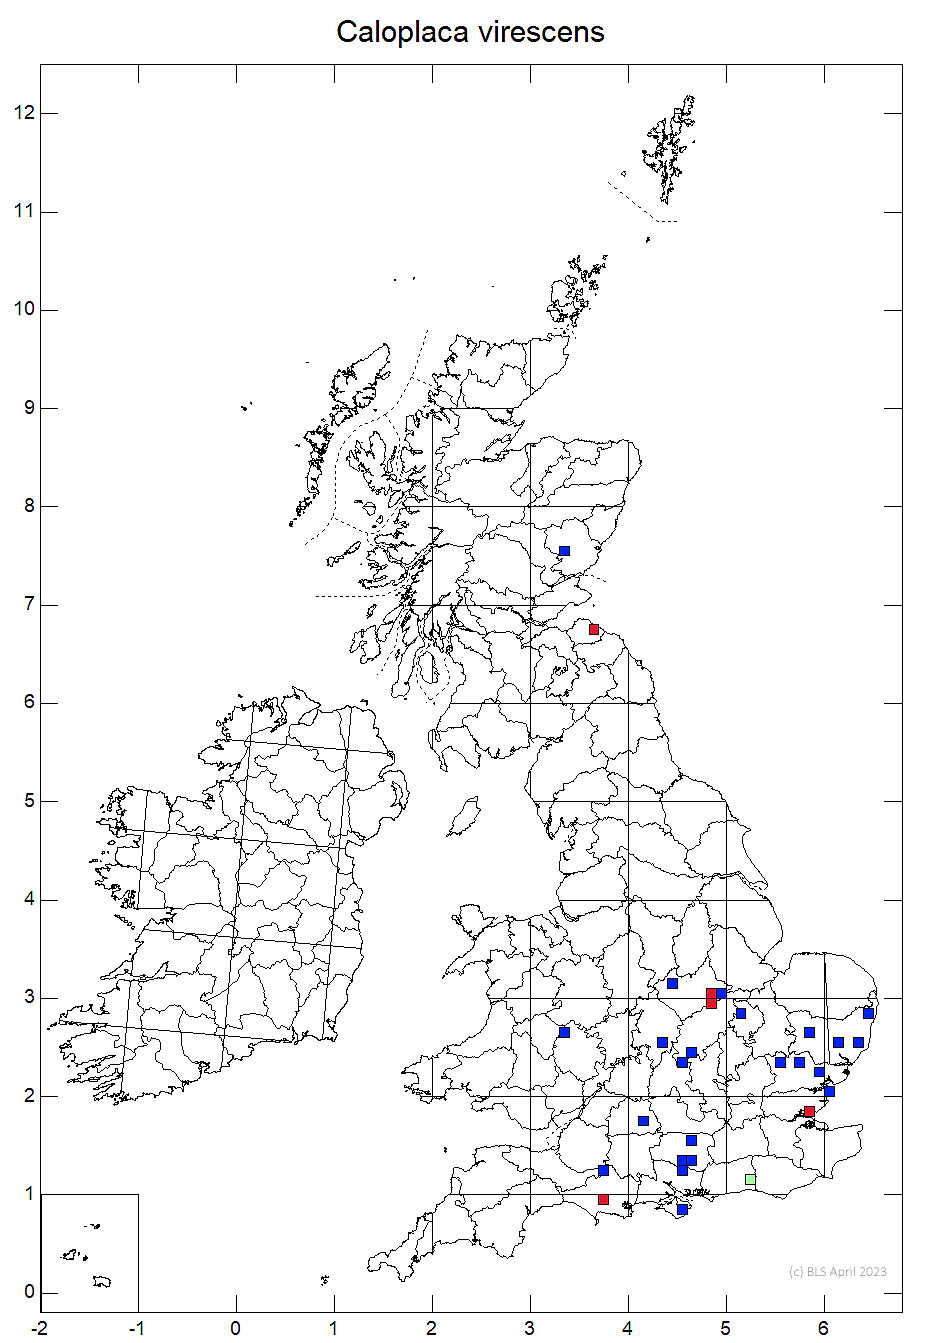 Caloplaca virescens 10km sq distribution map